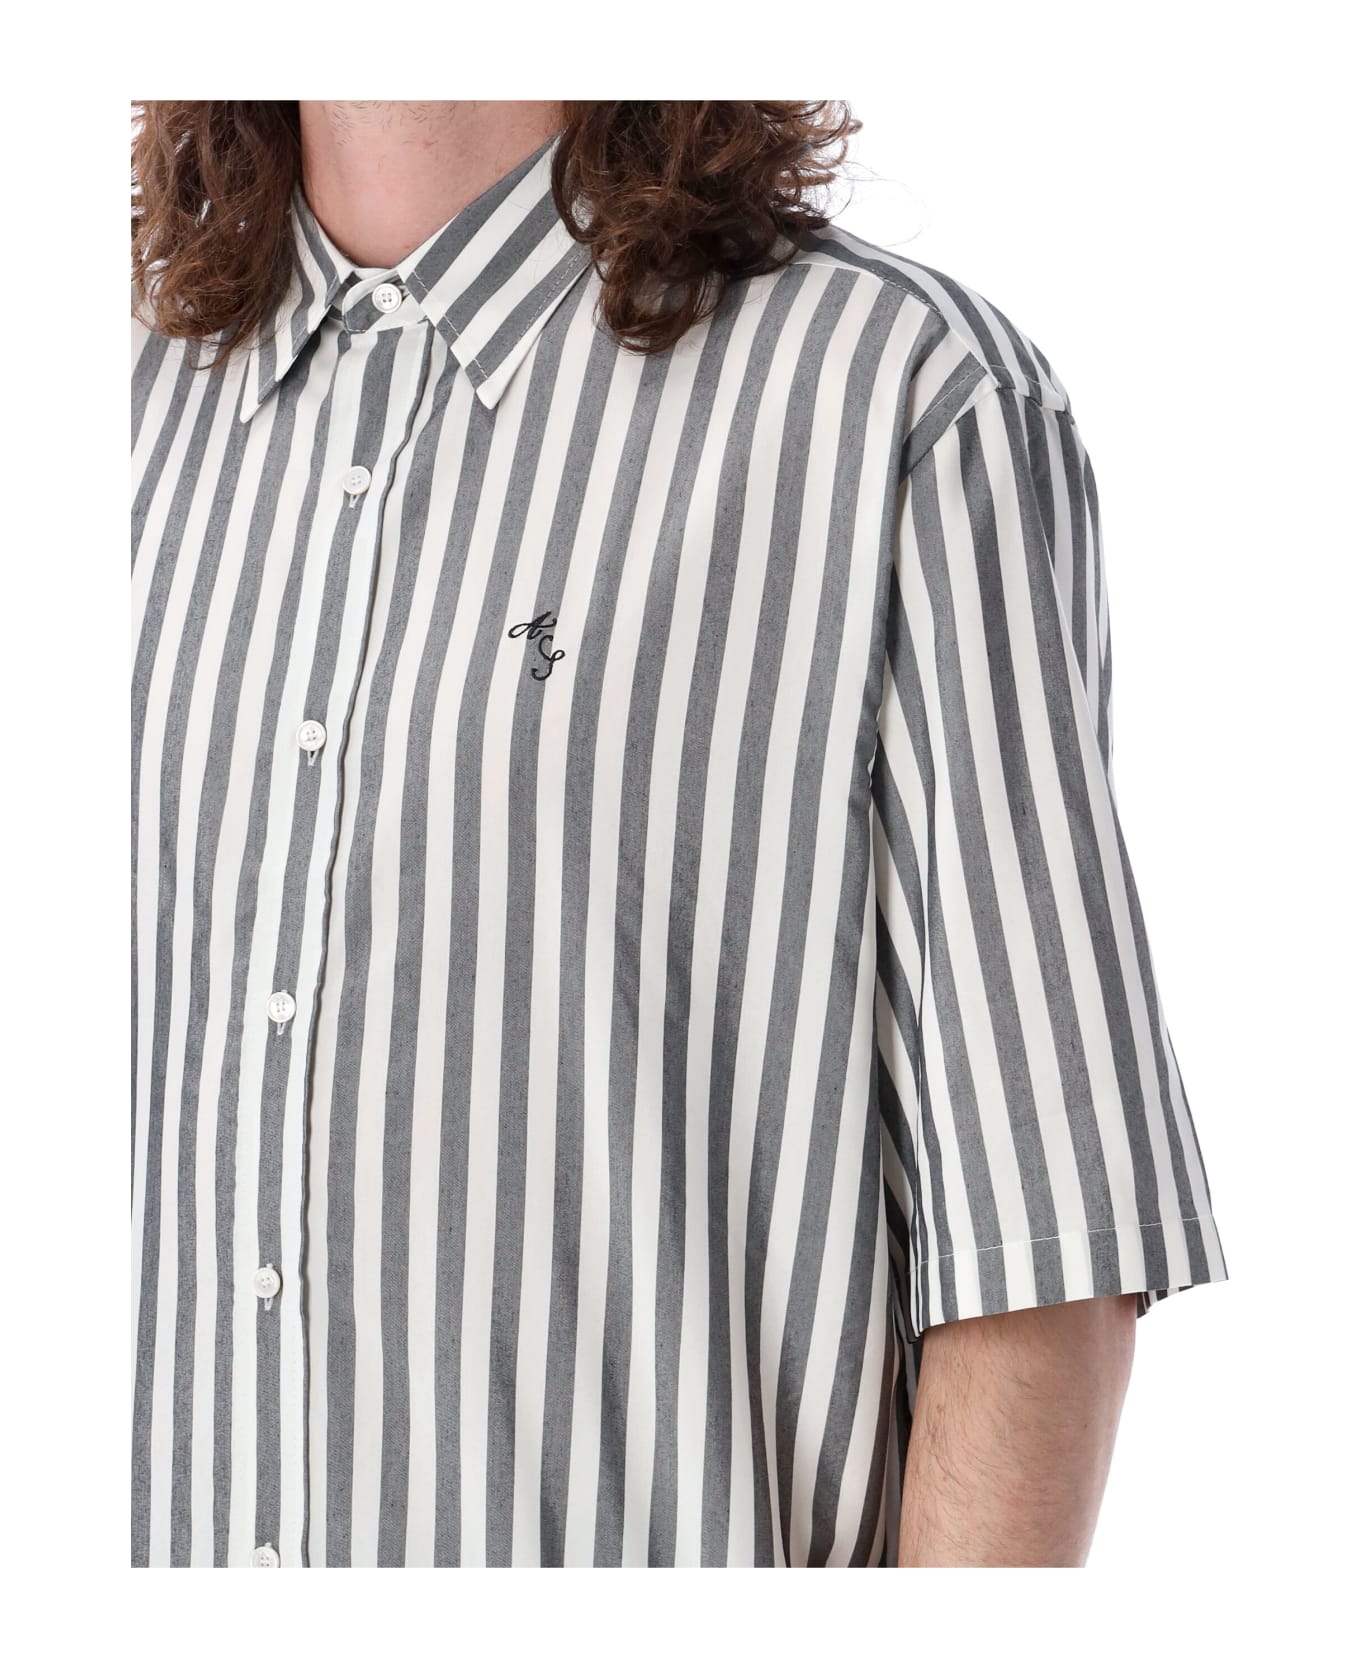 Acne Studios Stripe Button-up Shirt - WHITE BLACK STRIPES